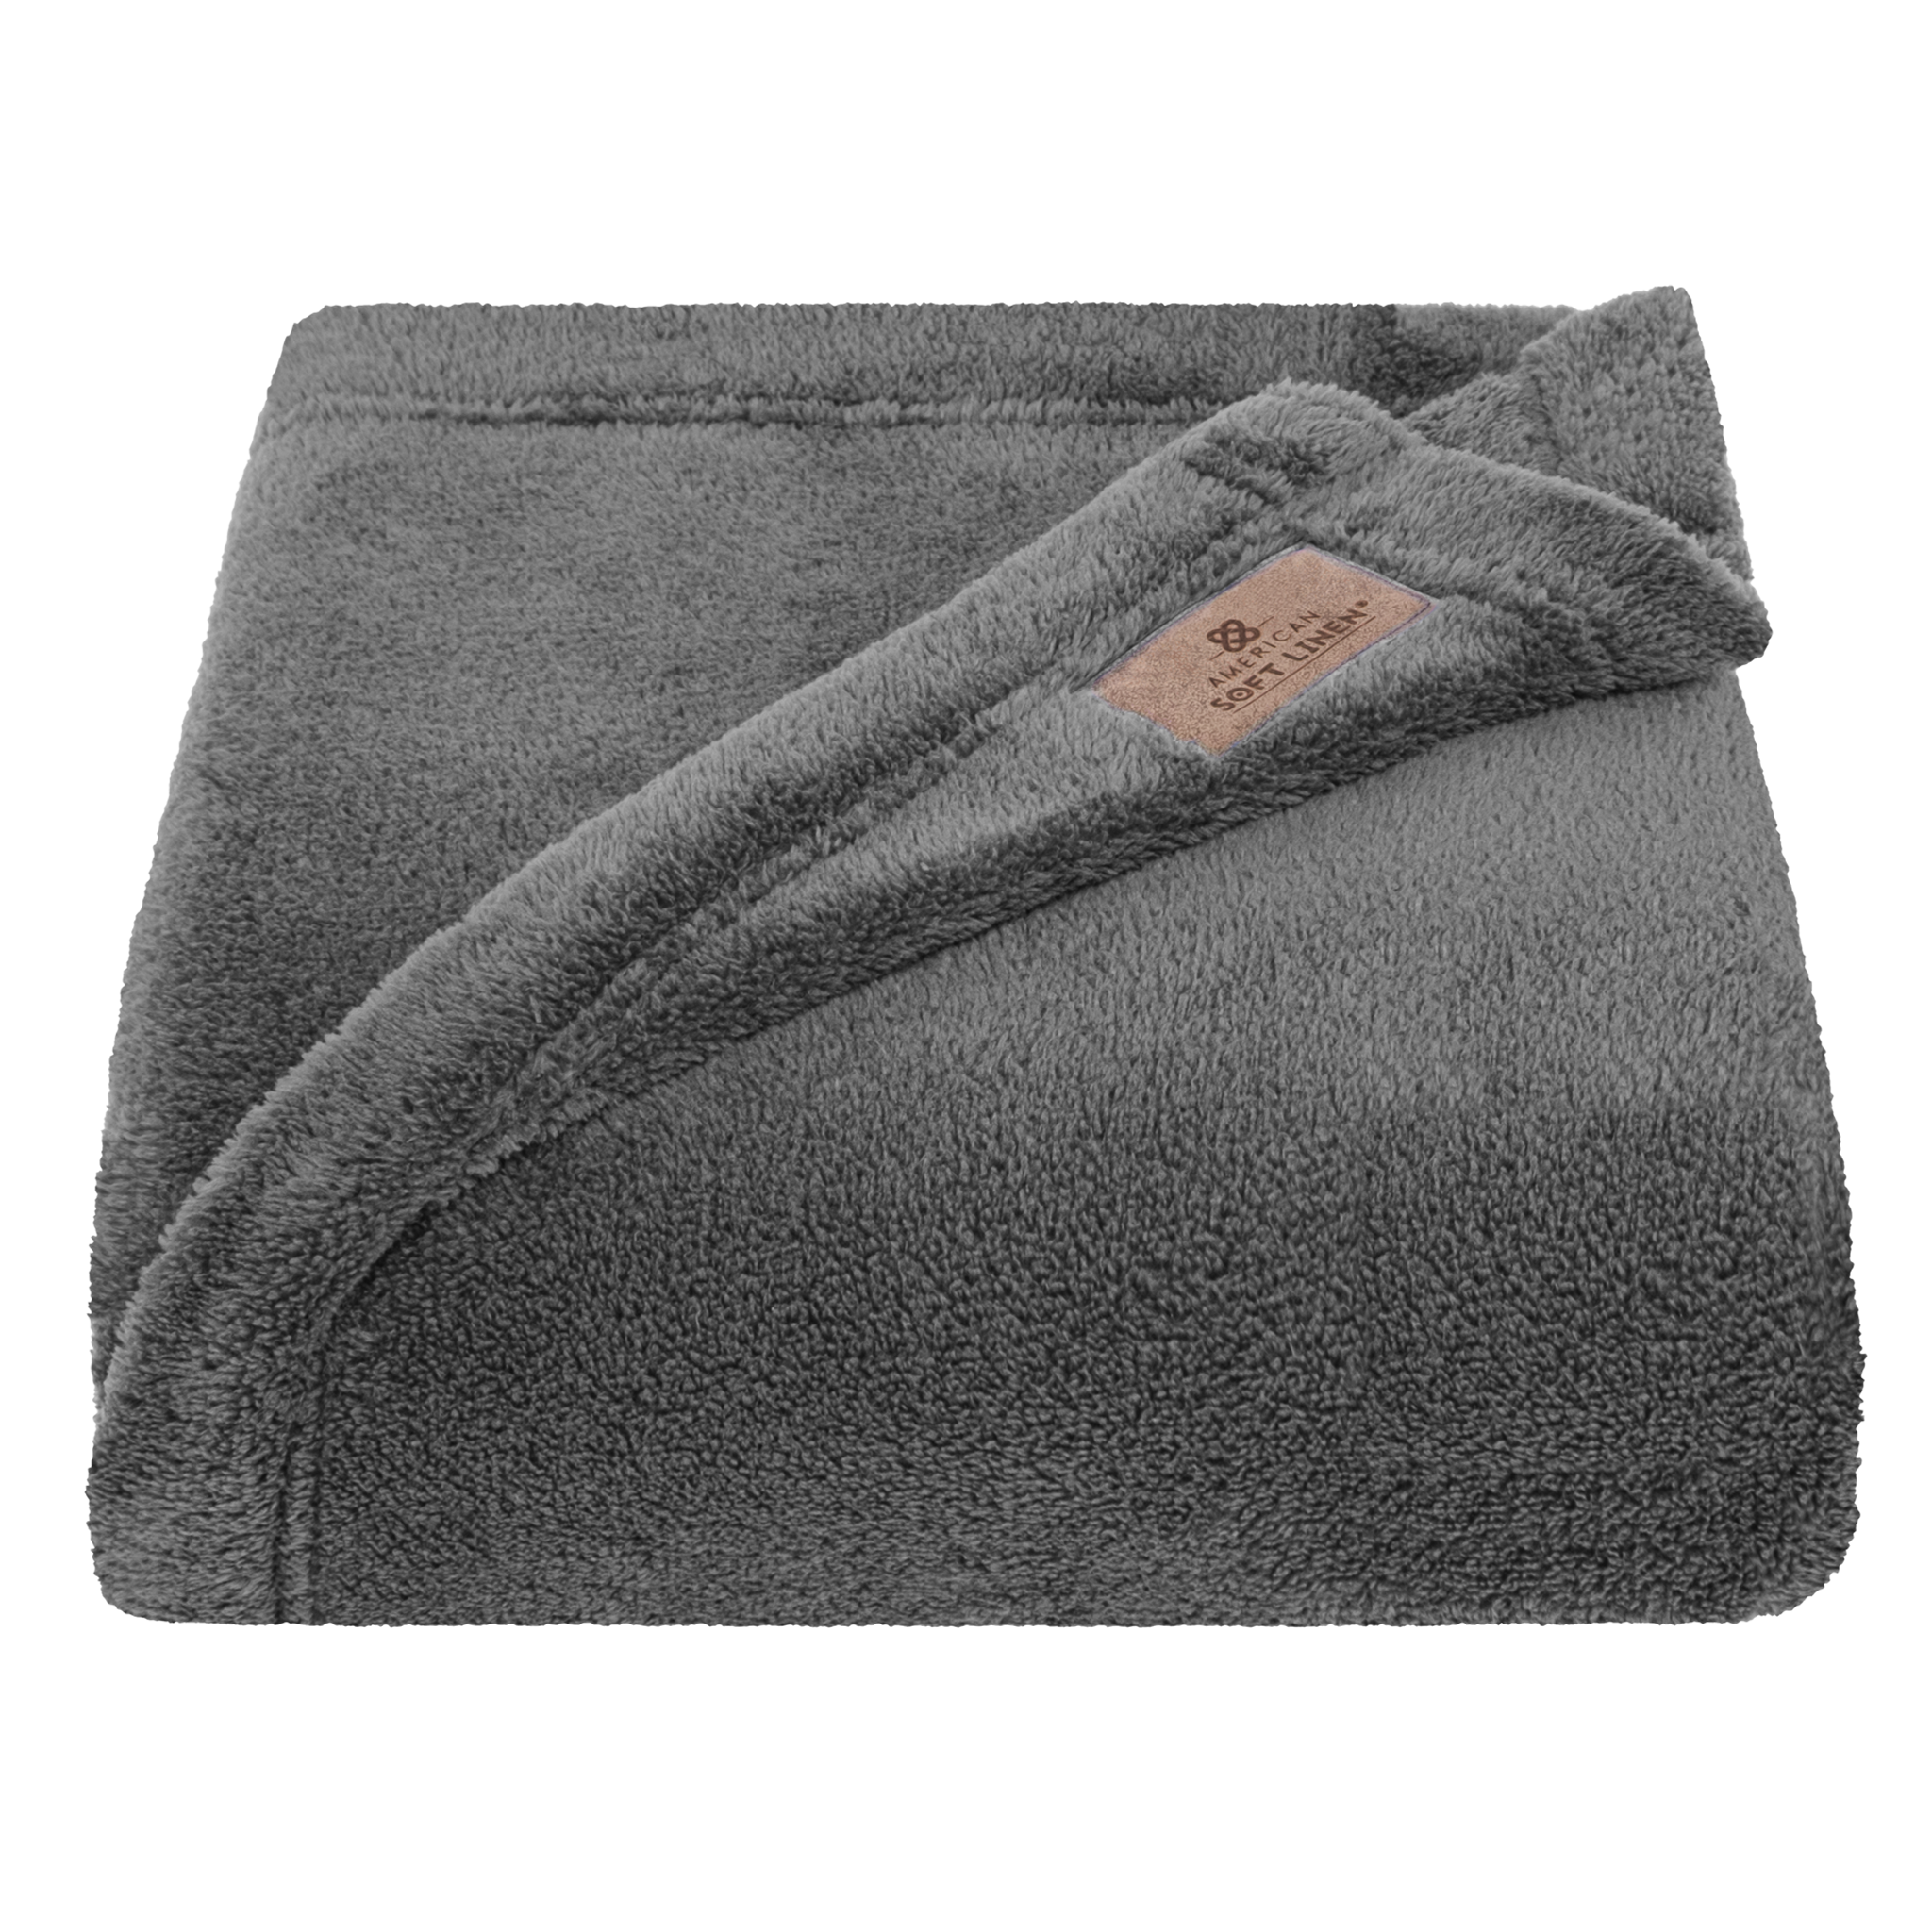 American Soft Linen - Bedding Fleece Blanket - Throw Size 50x60 inches - Gray - 3